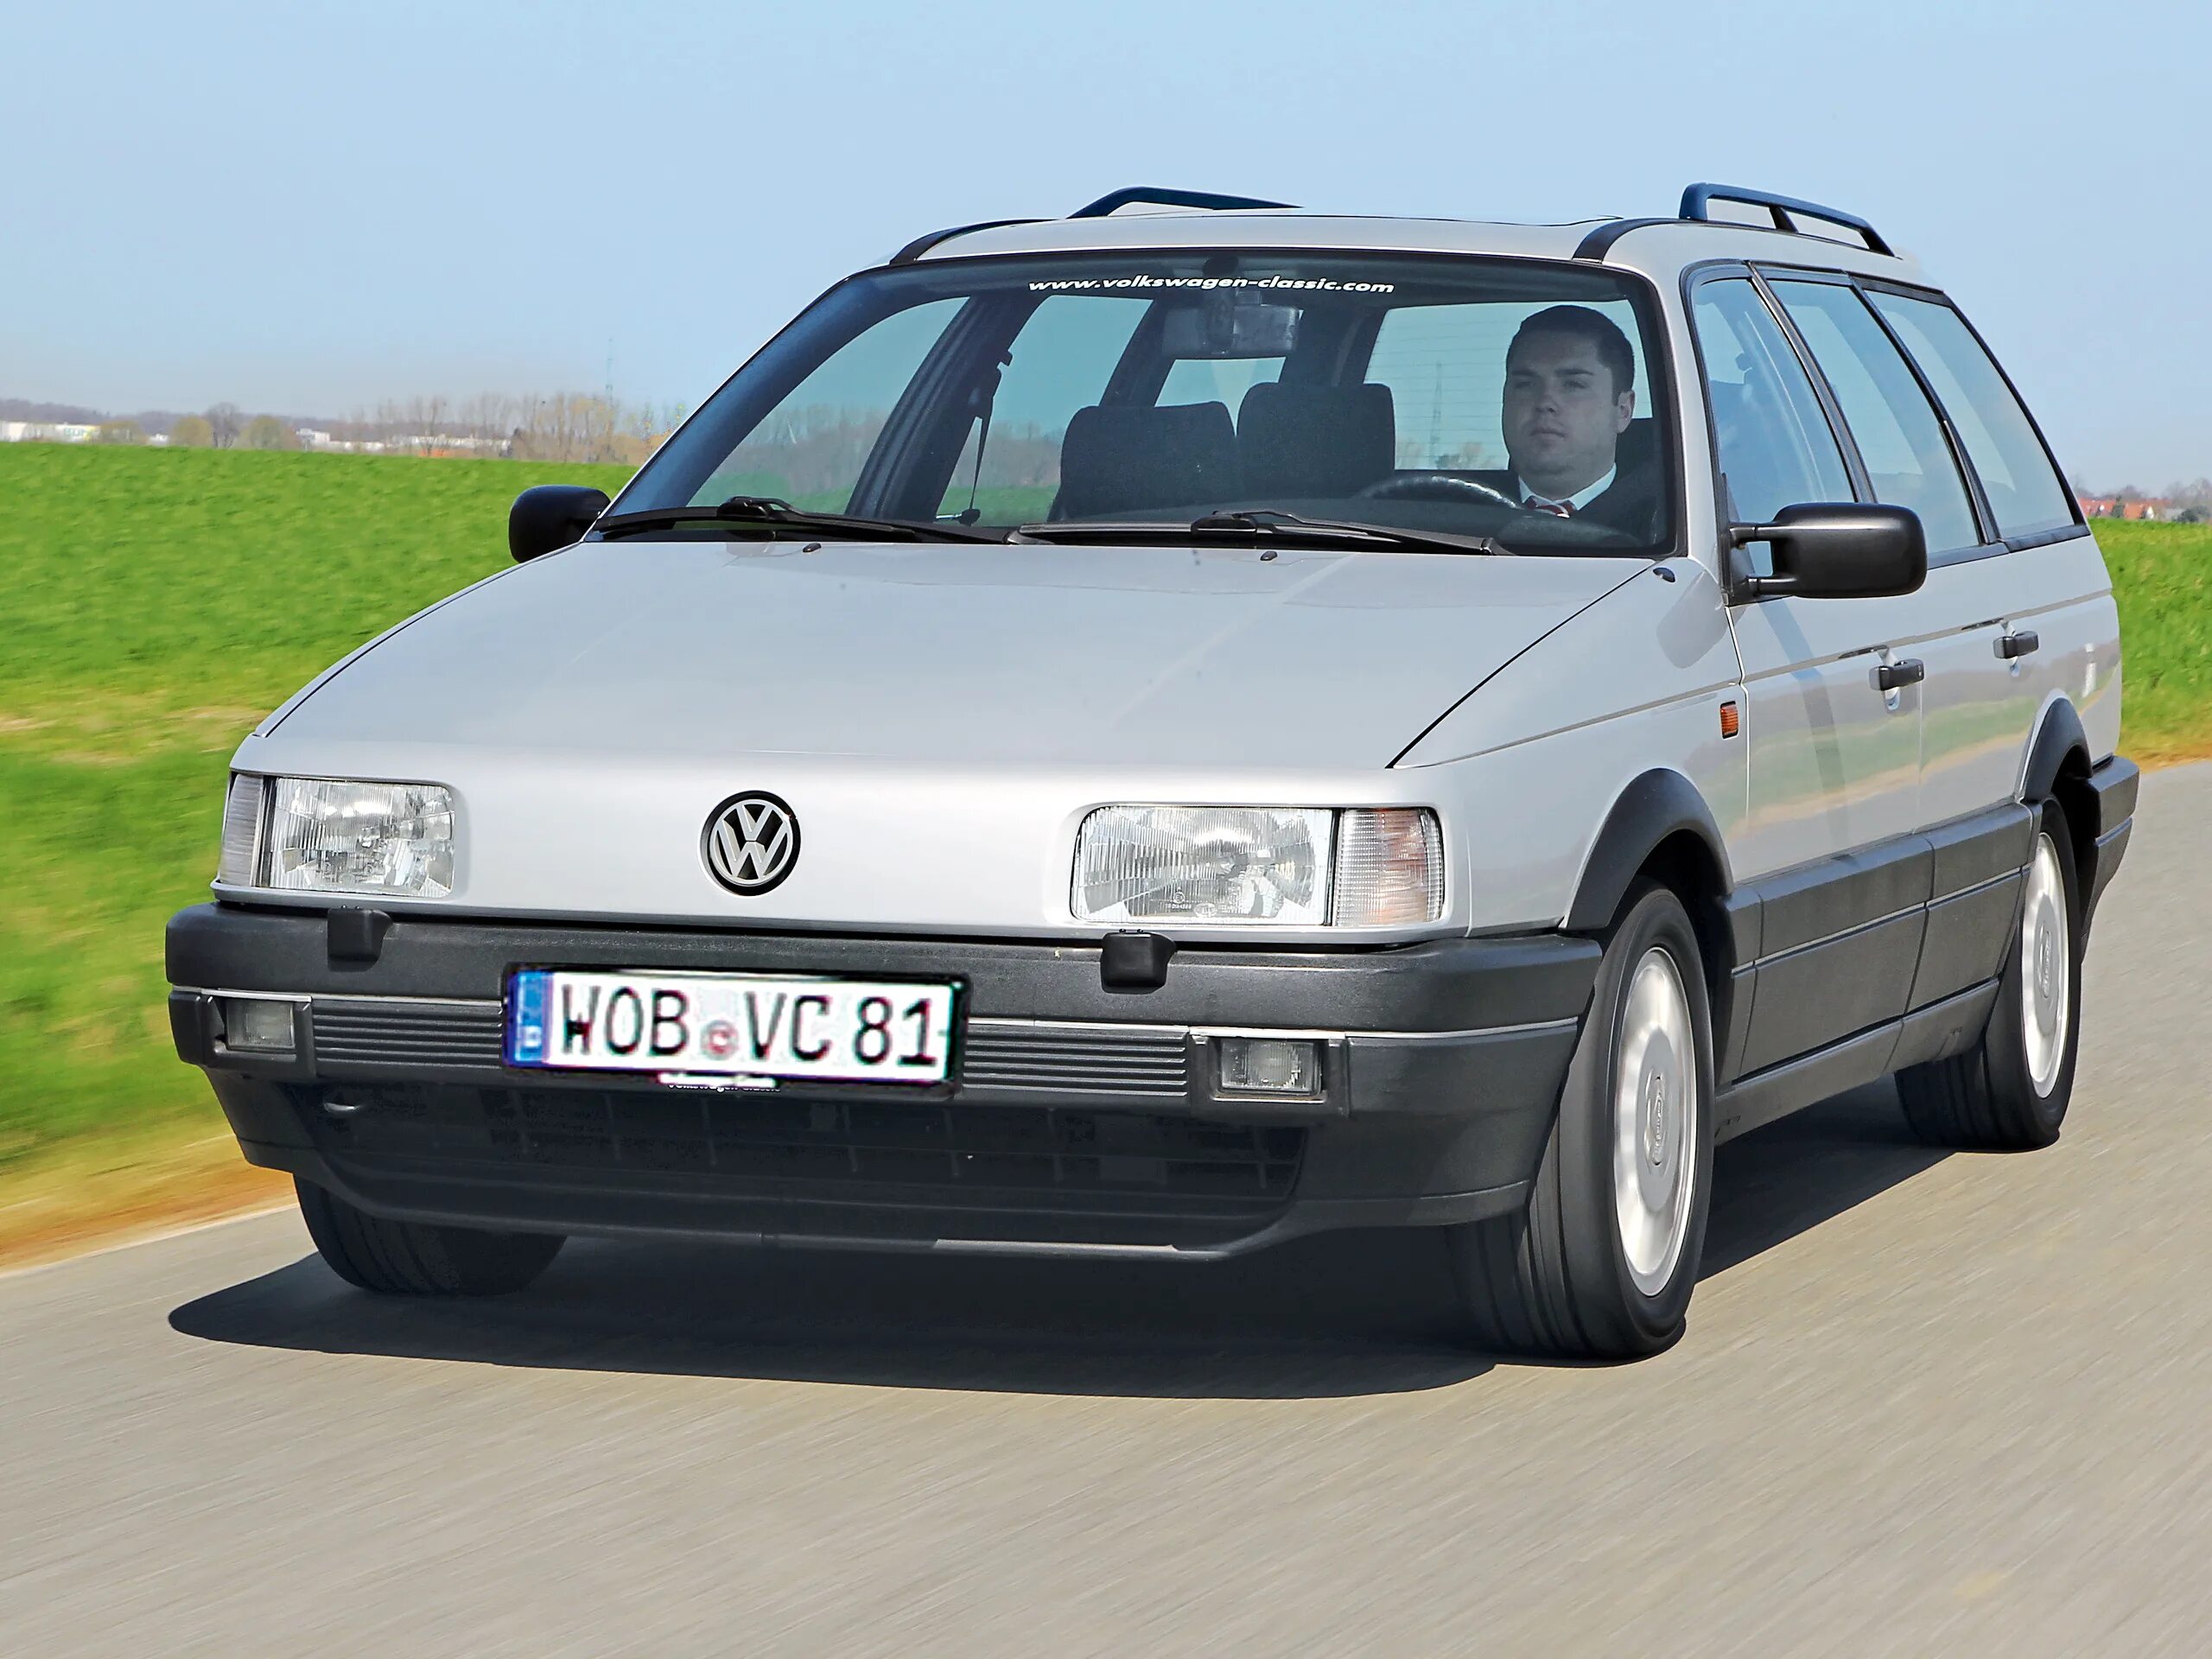 Volkswagen Passat b3 универсал. Volkswagen Passat b4 variant. Volkswagen Passat b3 variant. VW Passat b3 variant Syncro. Купить фольксваген пассат 2